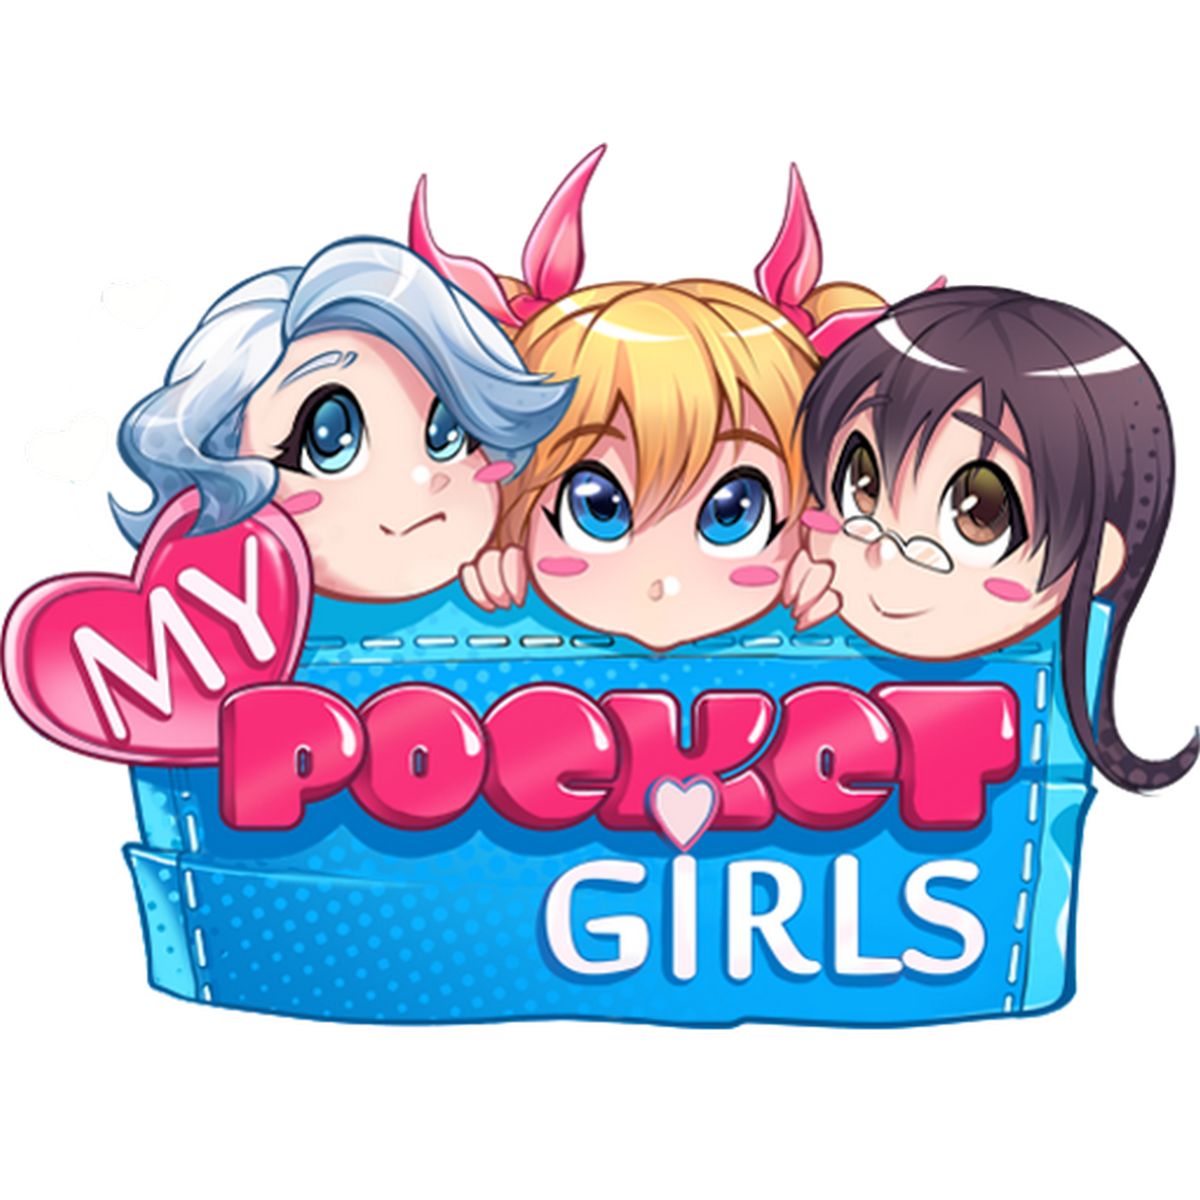 My Pocket Girls